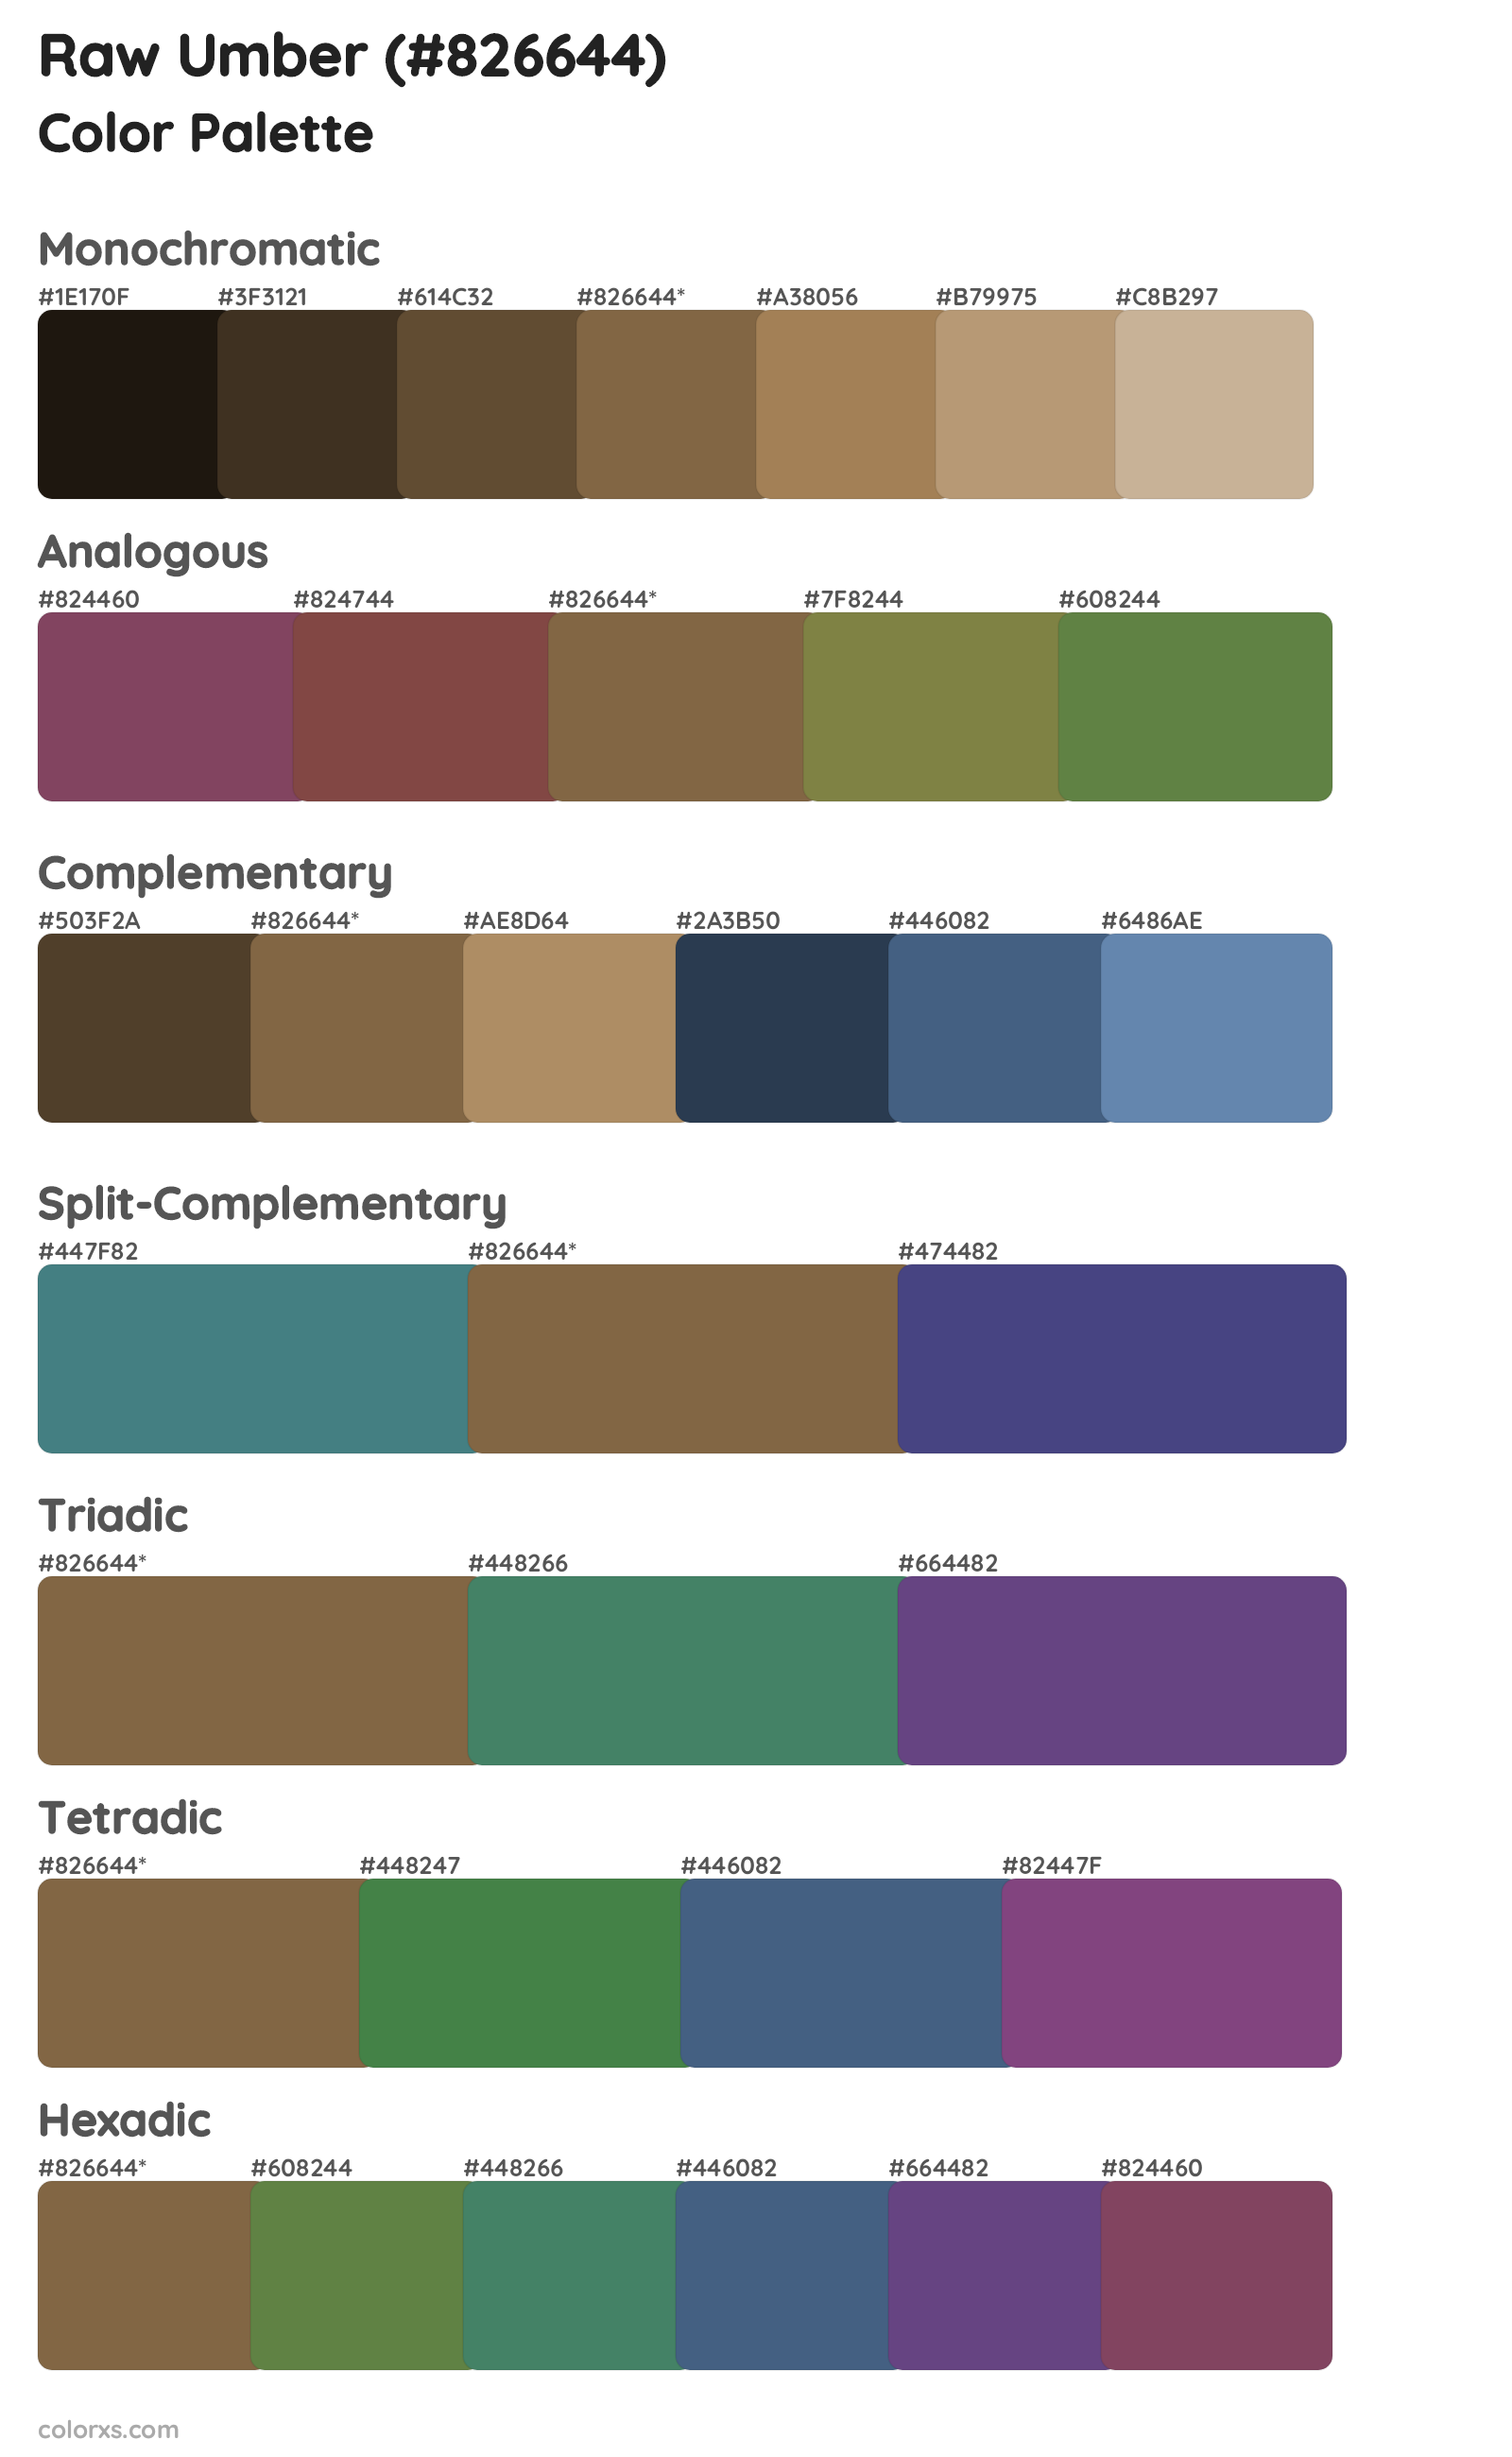 Raw Umber Color Scheme Palettes